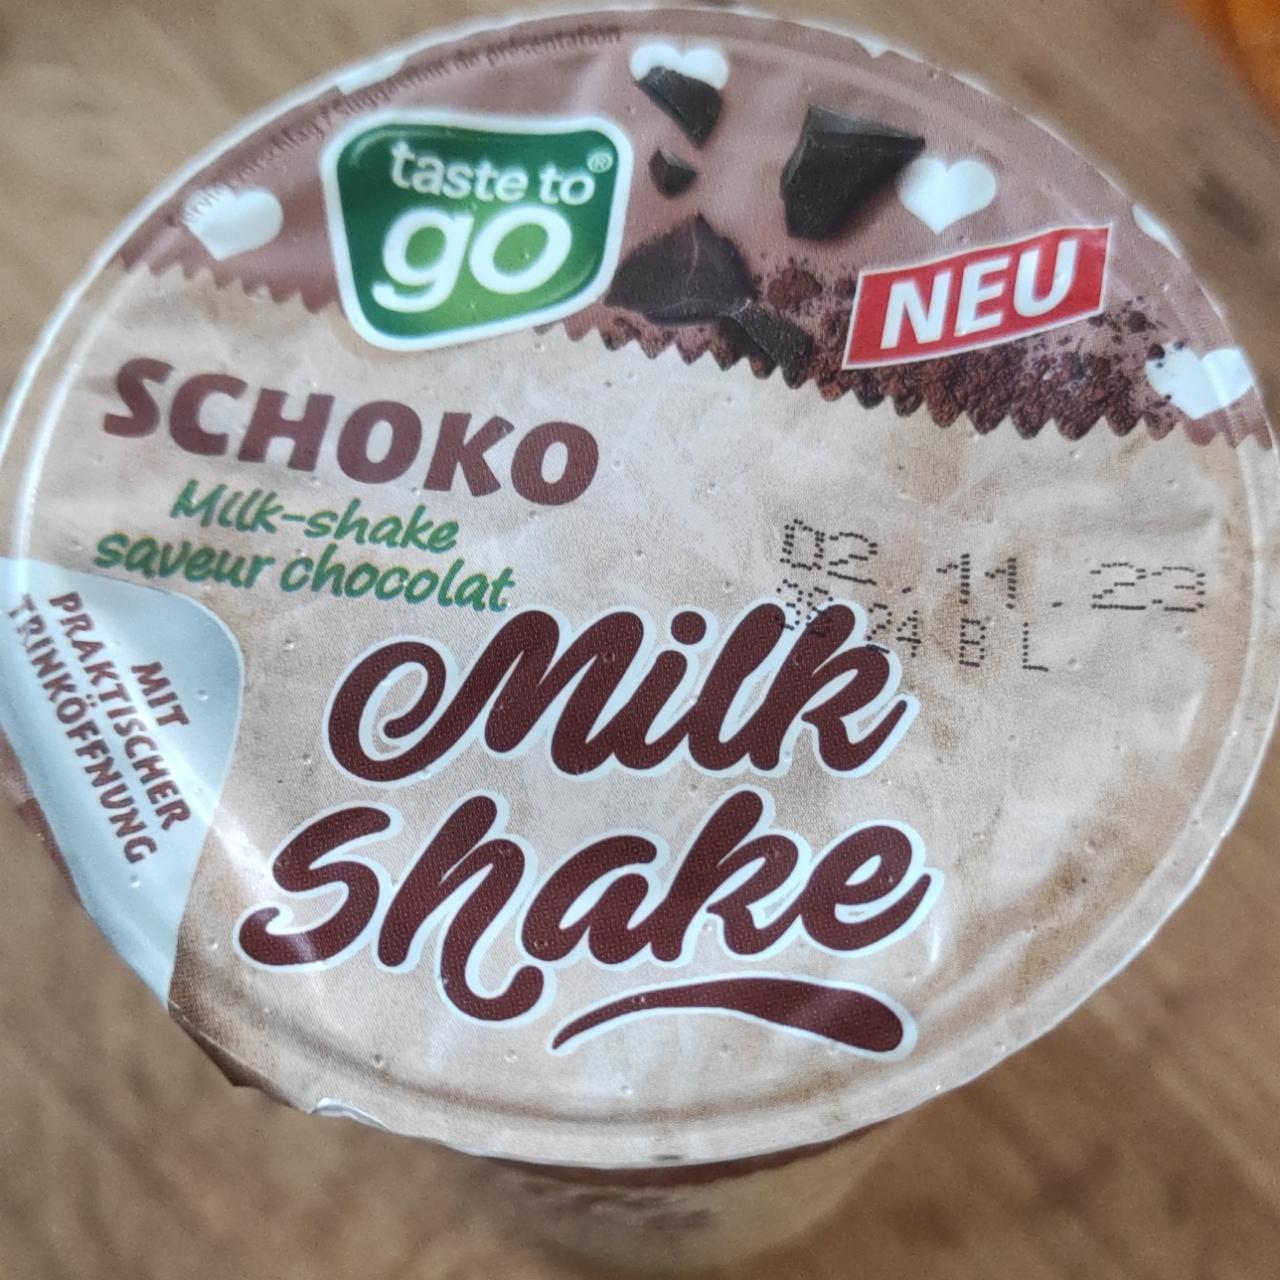 Fotografie - Milkshake schoko Taste to go